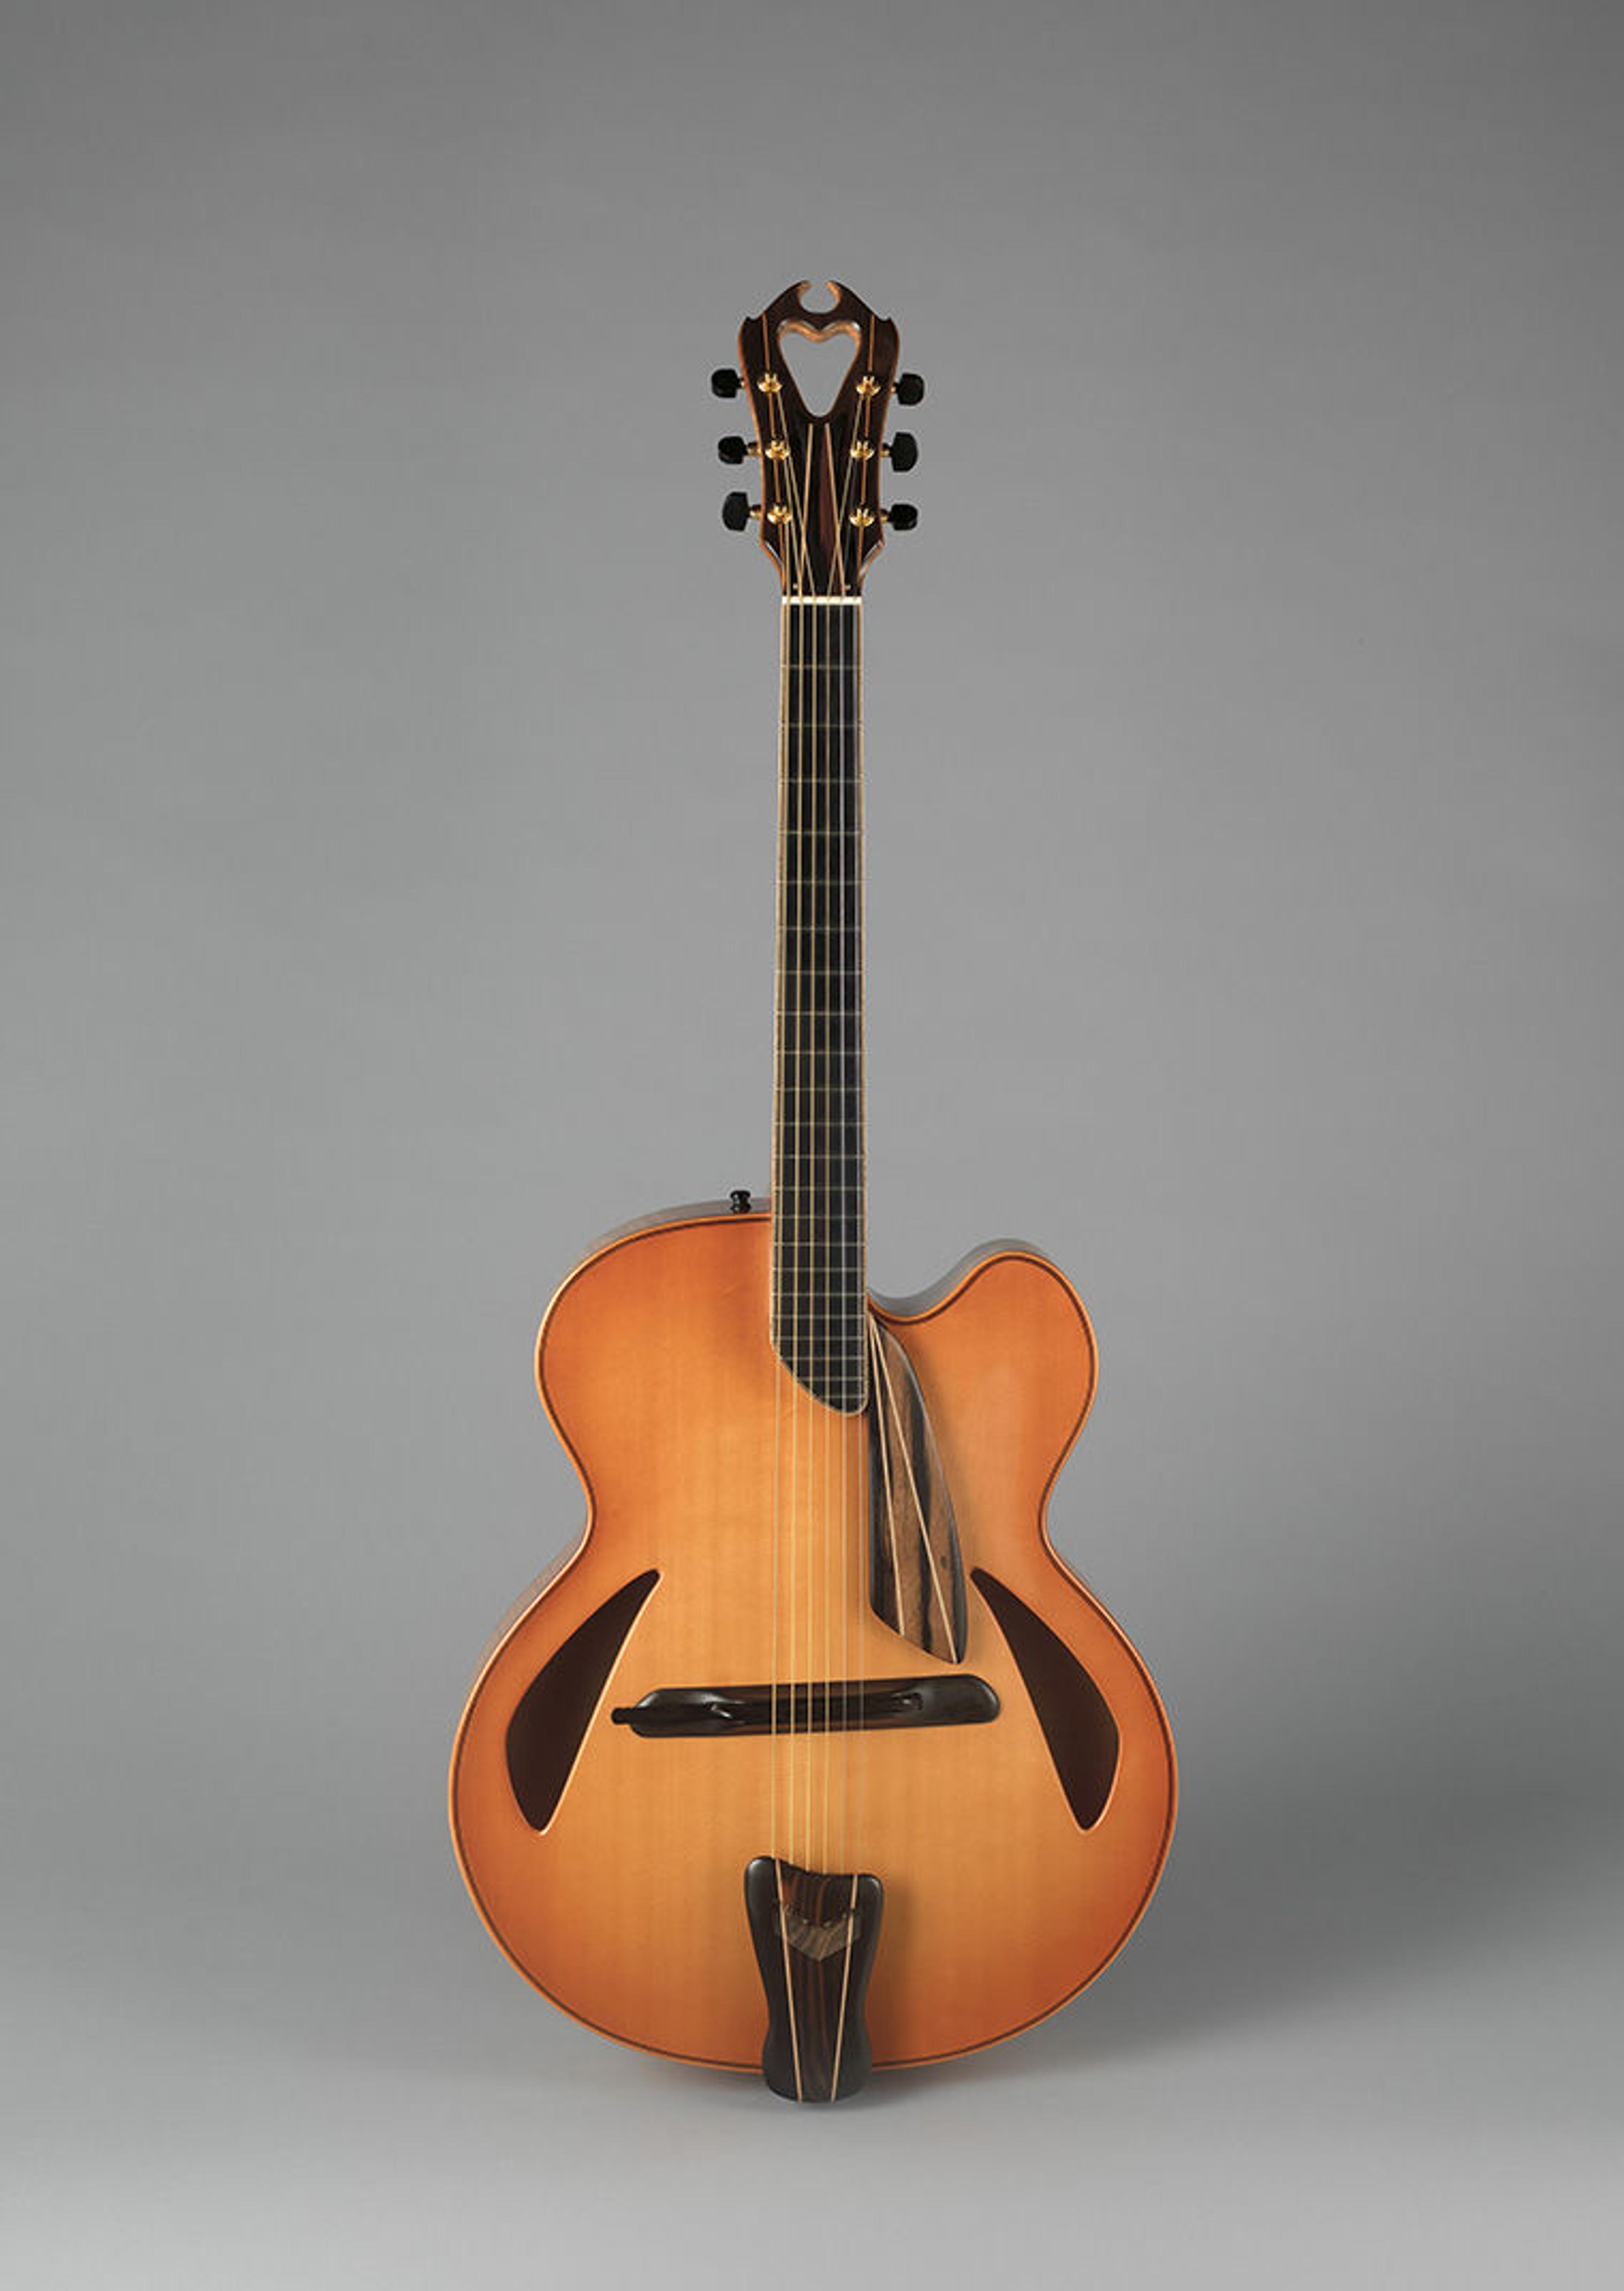 James D'Aquisto (American, 1935–1995). Archtop guitar, 1993. Spruce, maple, ebony, W: 17 in. (43.2 cm). The Metropolitan Museum of Art, New York, Gift of Steve Miller, 2012 (2012.246)